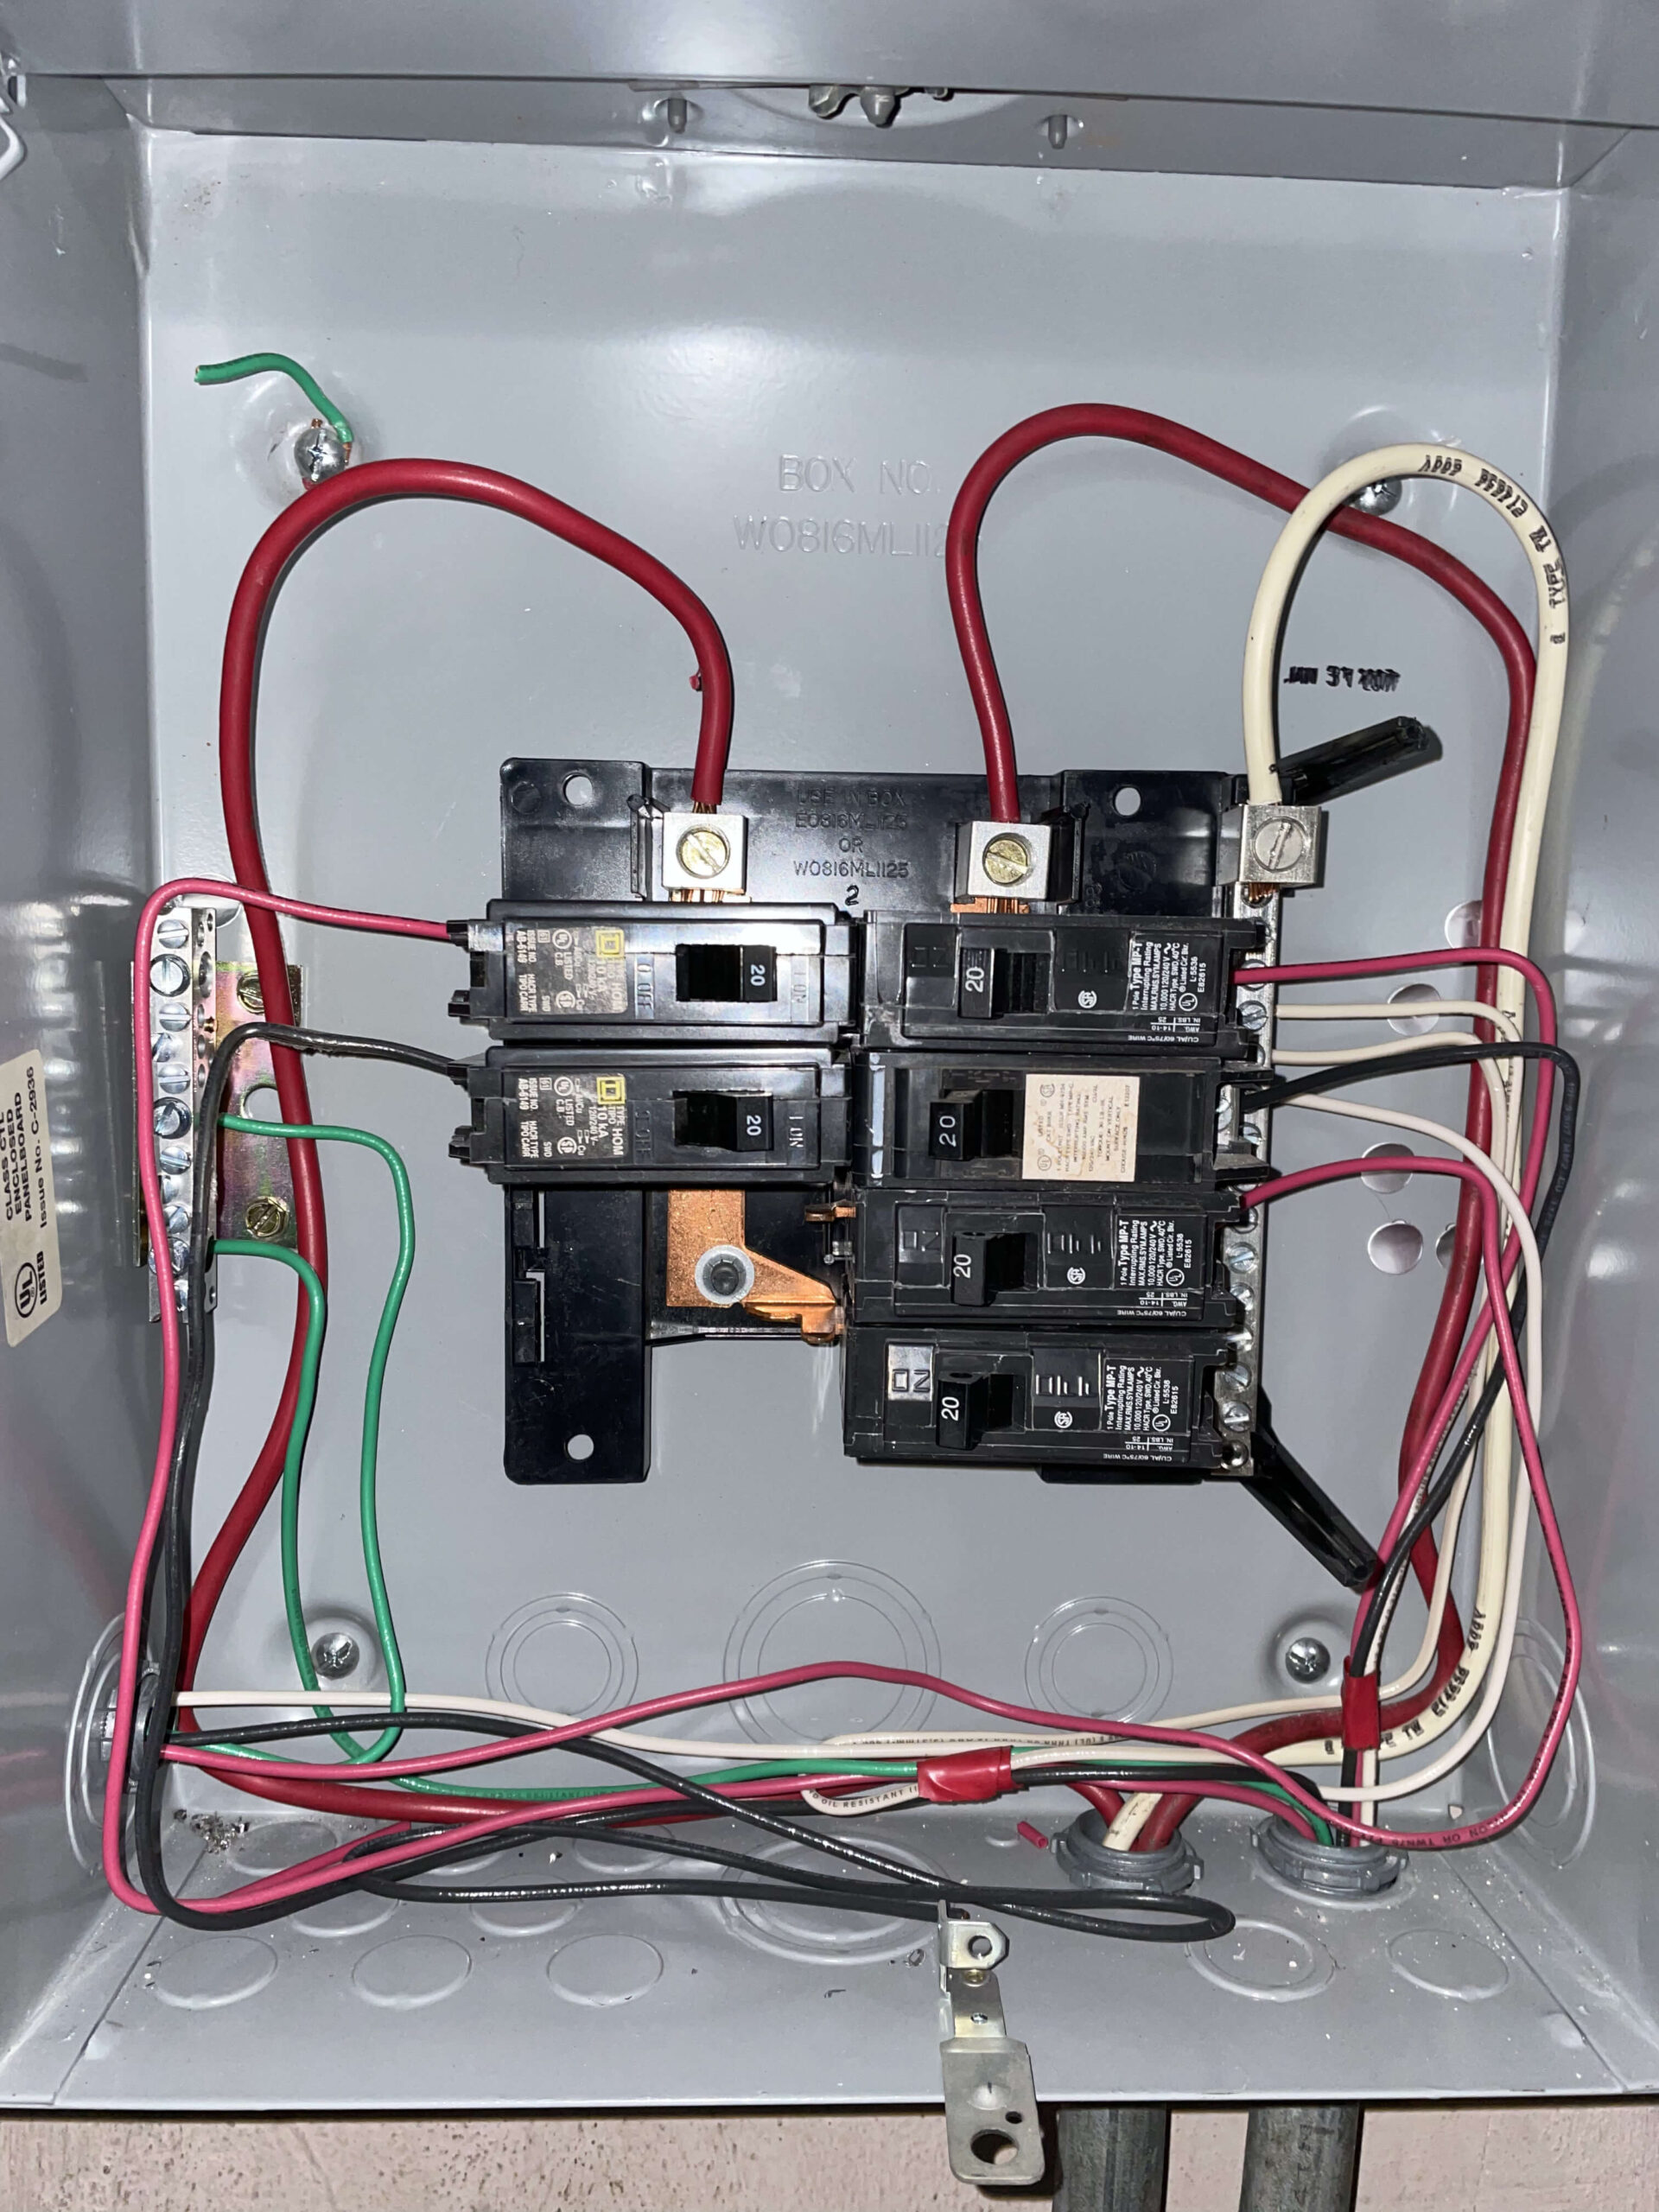 electrical panel open circuit breakers